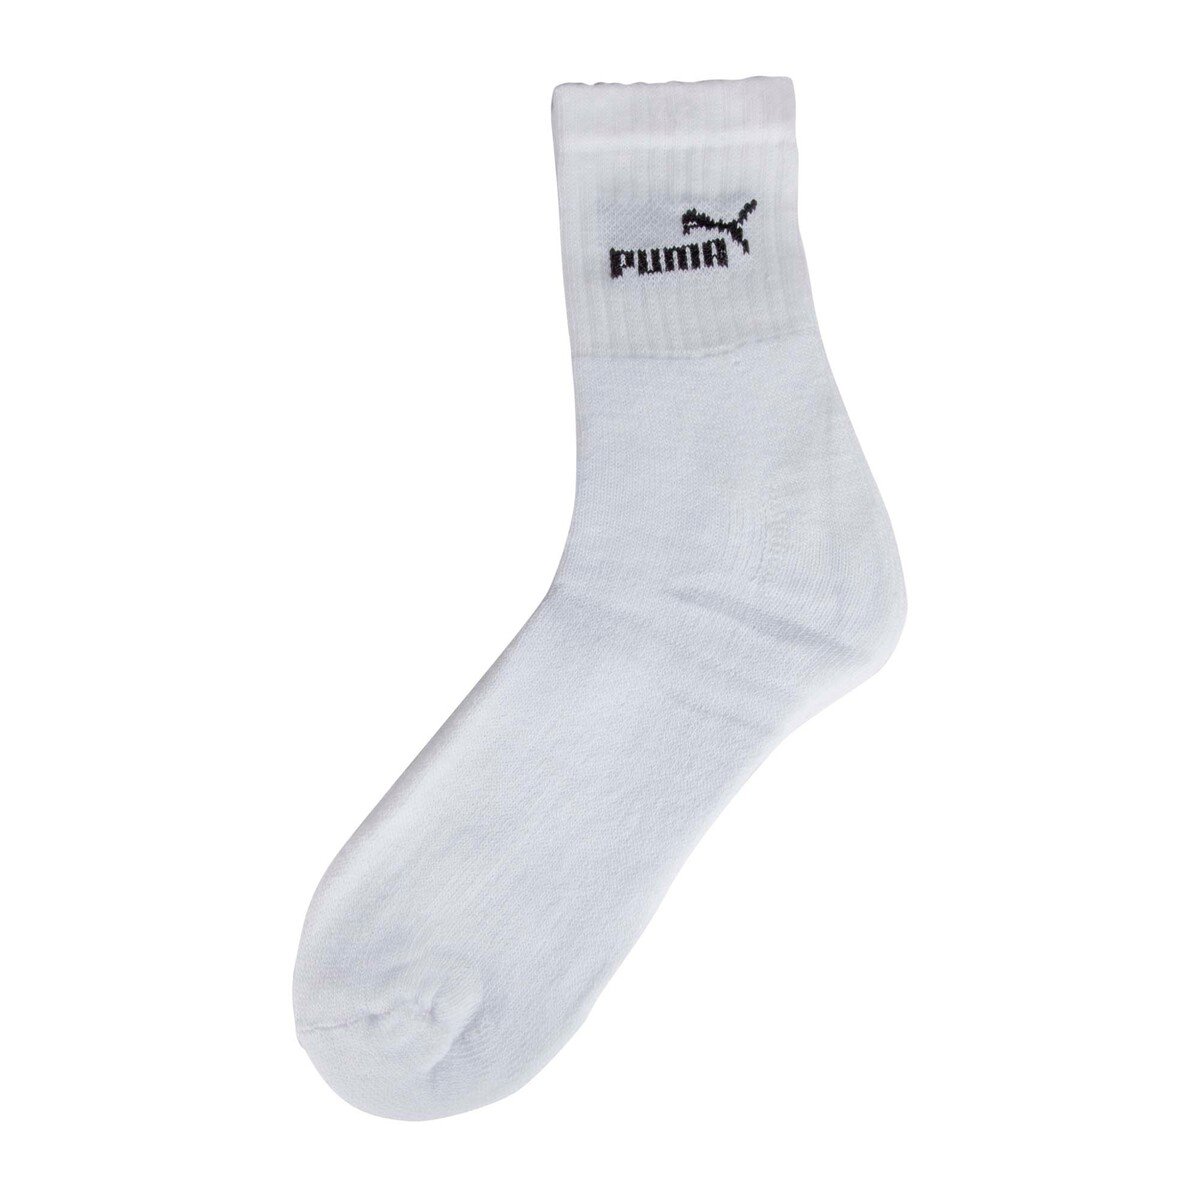 Puma Men's Short Crew Socks 3 Pair Pack 90636703 - Size 35-38